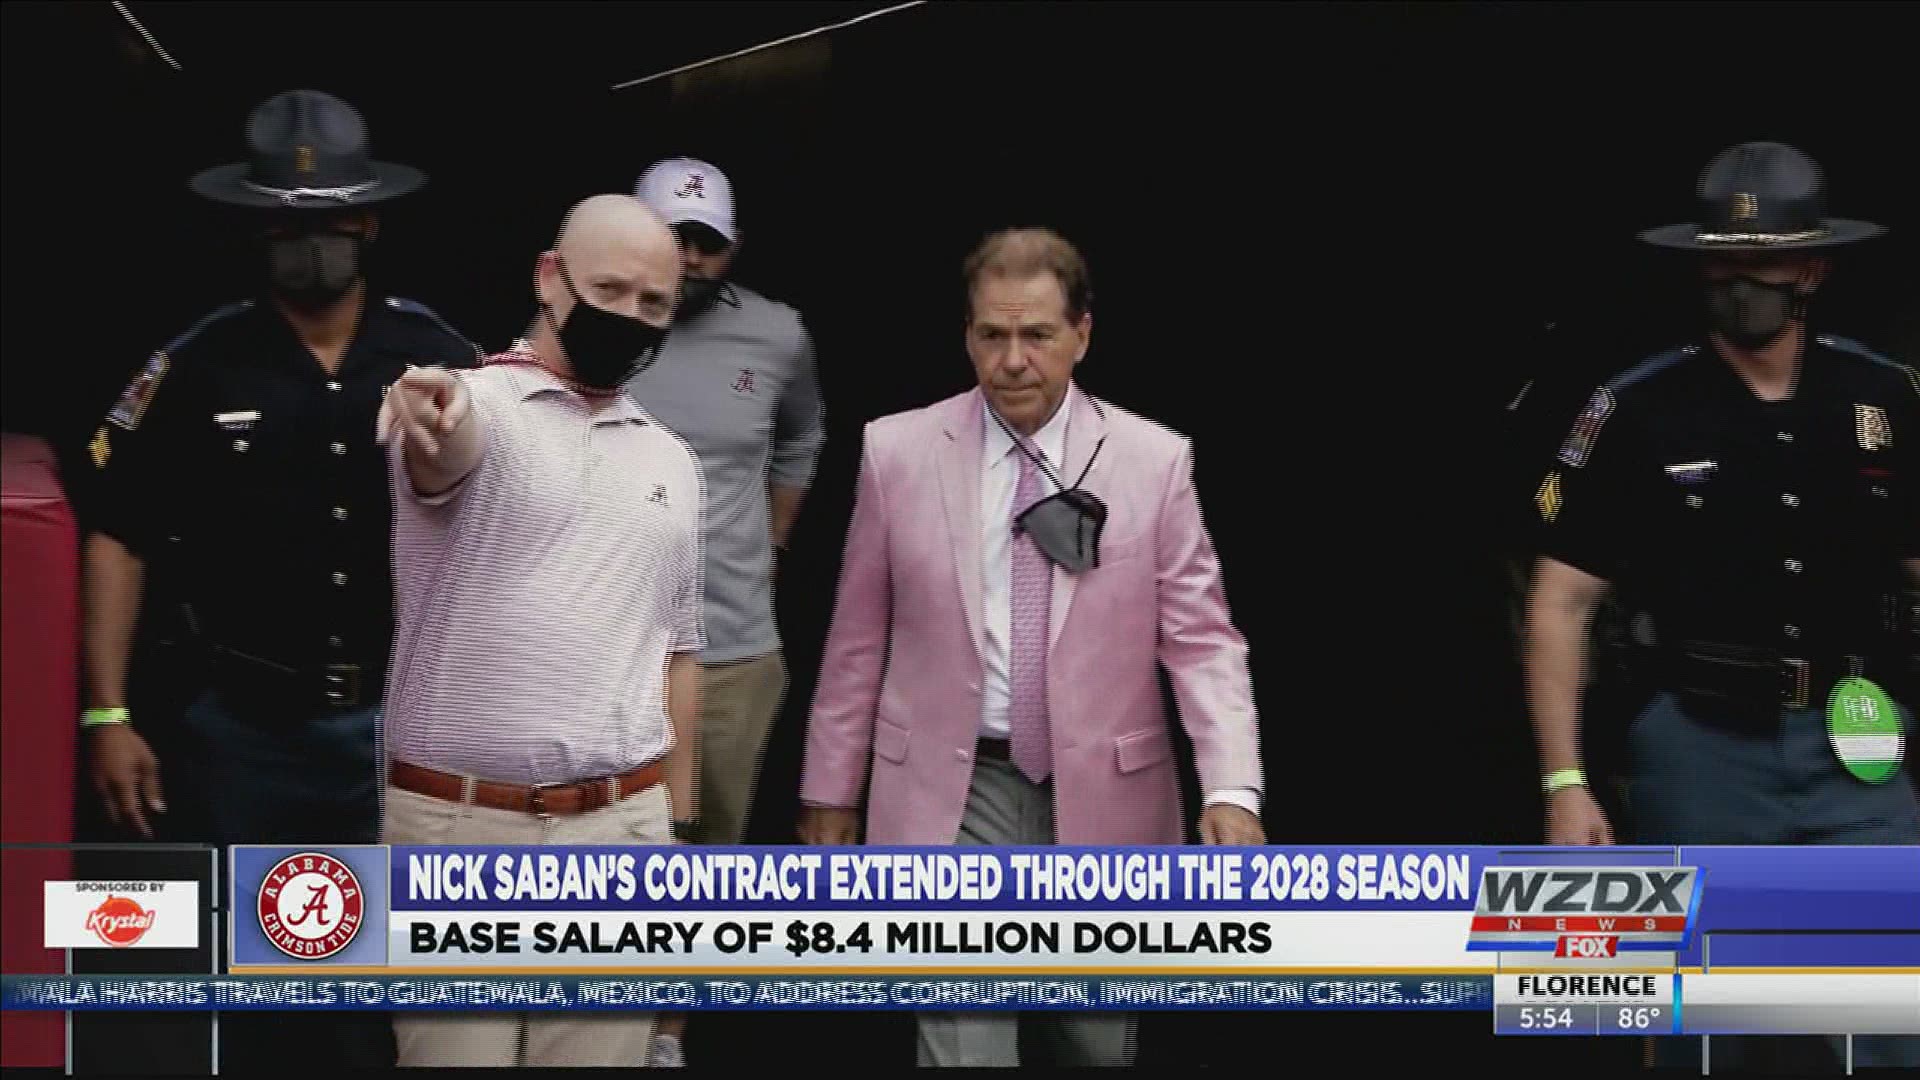 Nick Saban’s contract has been extended at Alabama through the 2028 Season